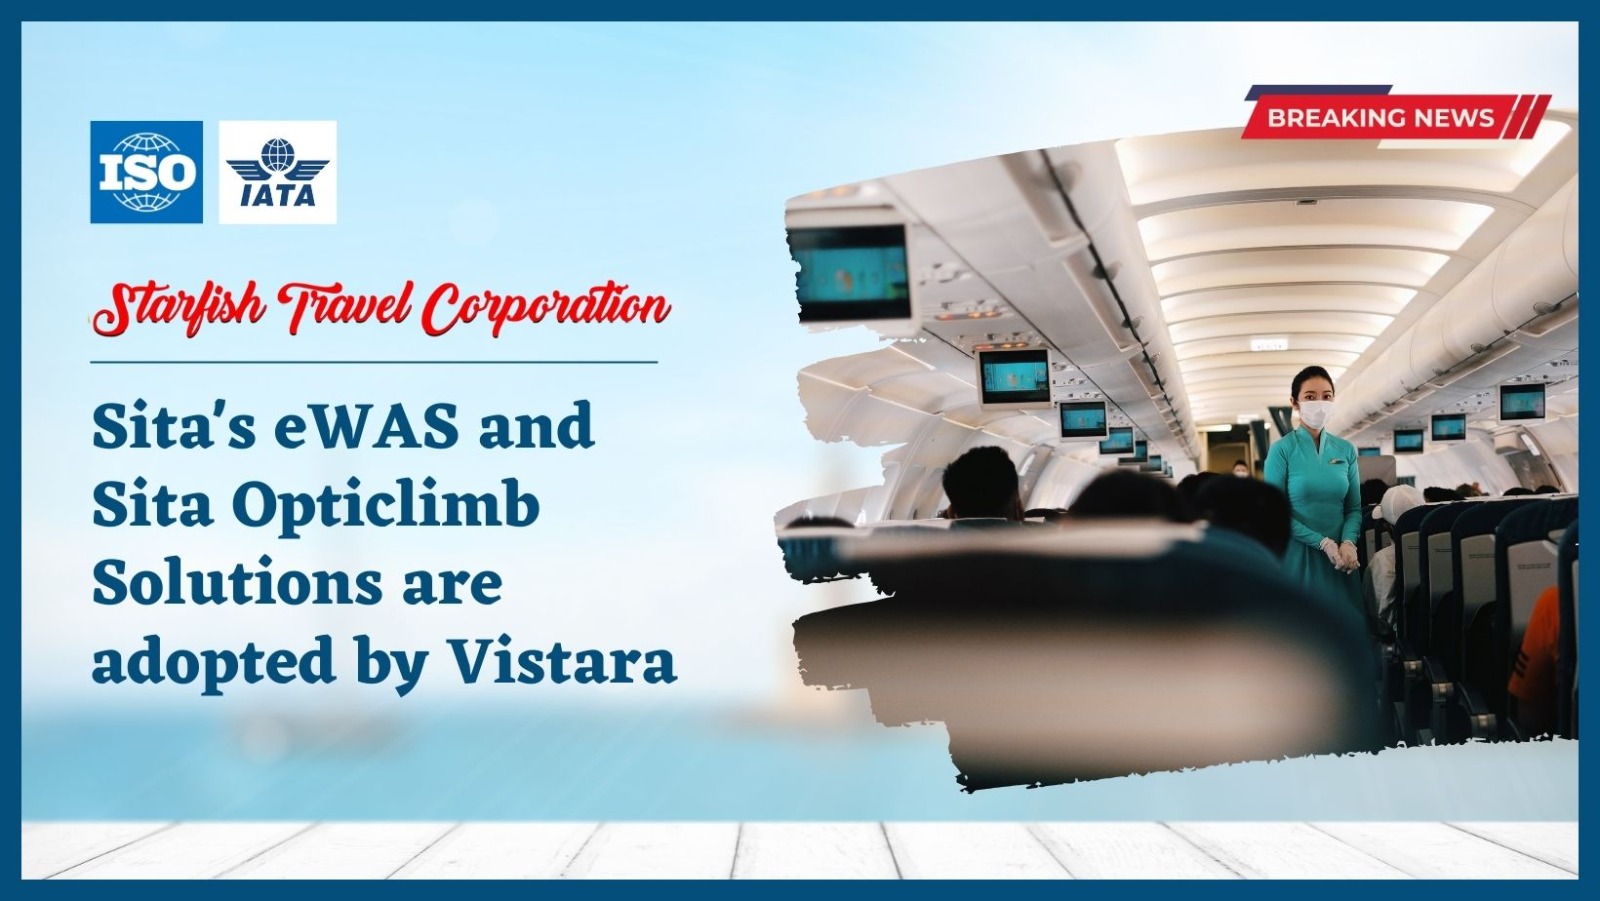 Sita’s eWAS and Sita Opticlimb Solutions are adopted by Vistara